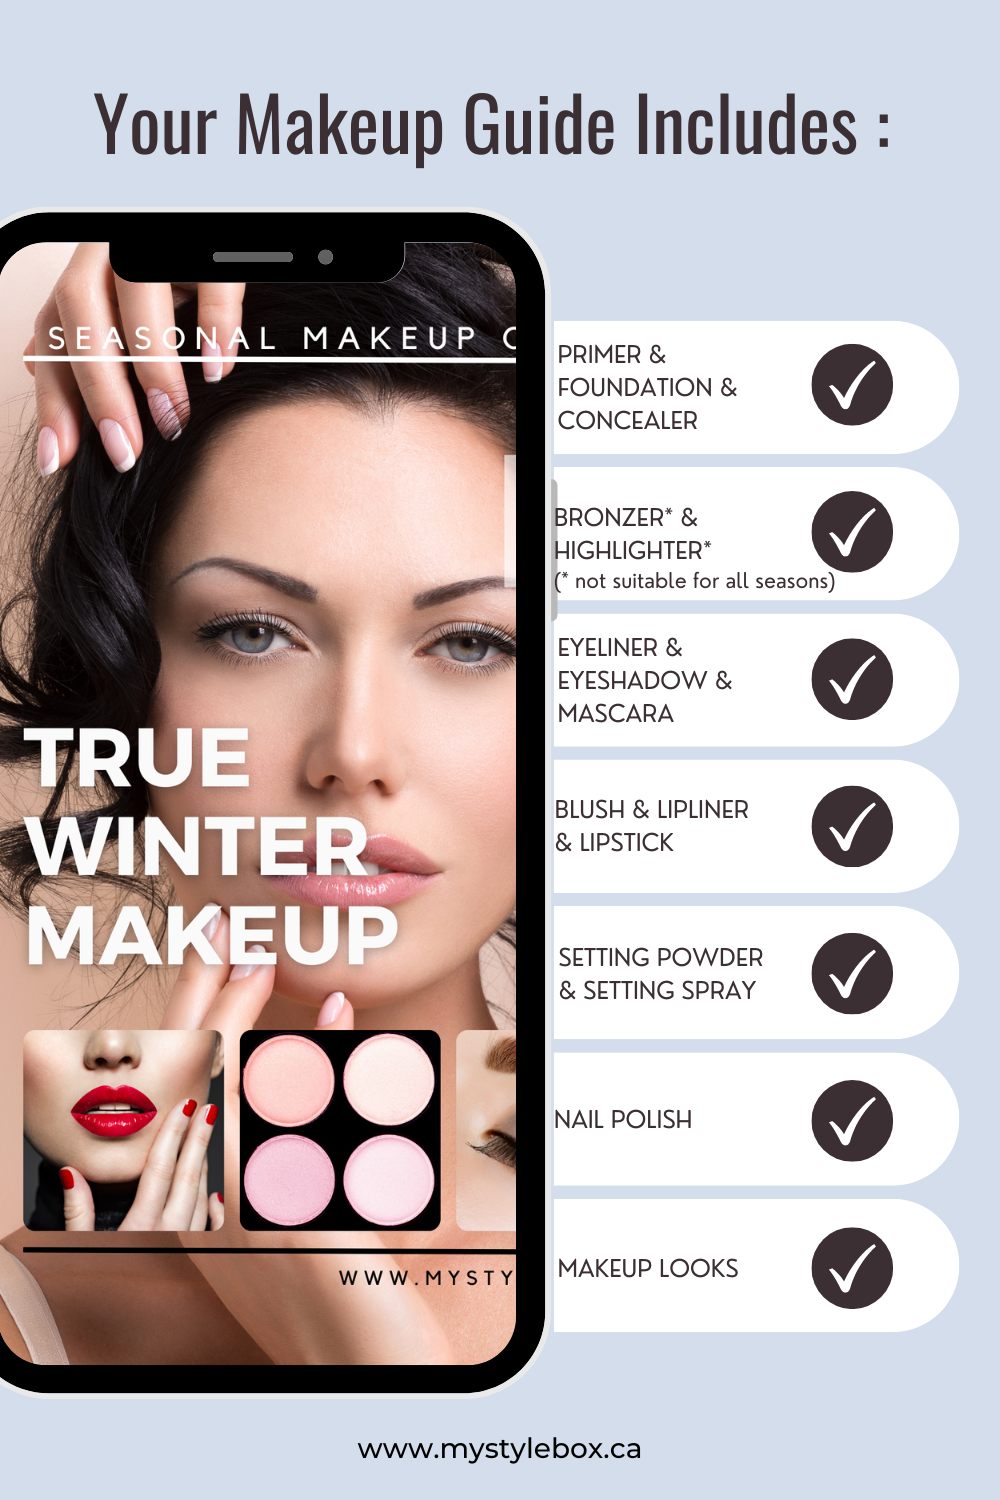 True (Cool) Winter Color Season Makeup Guide